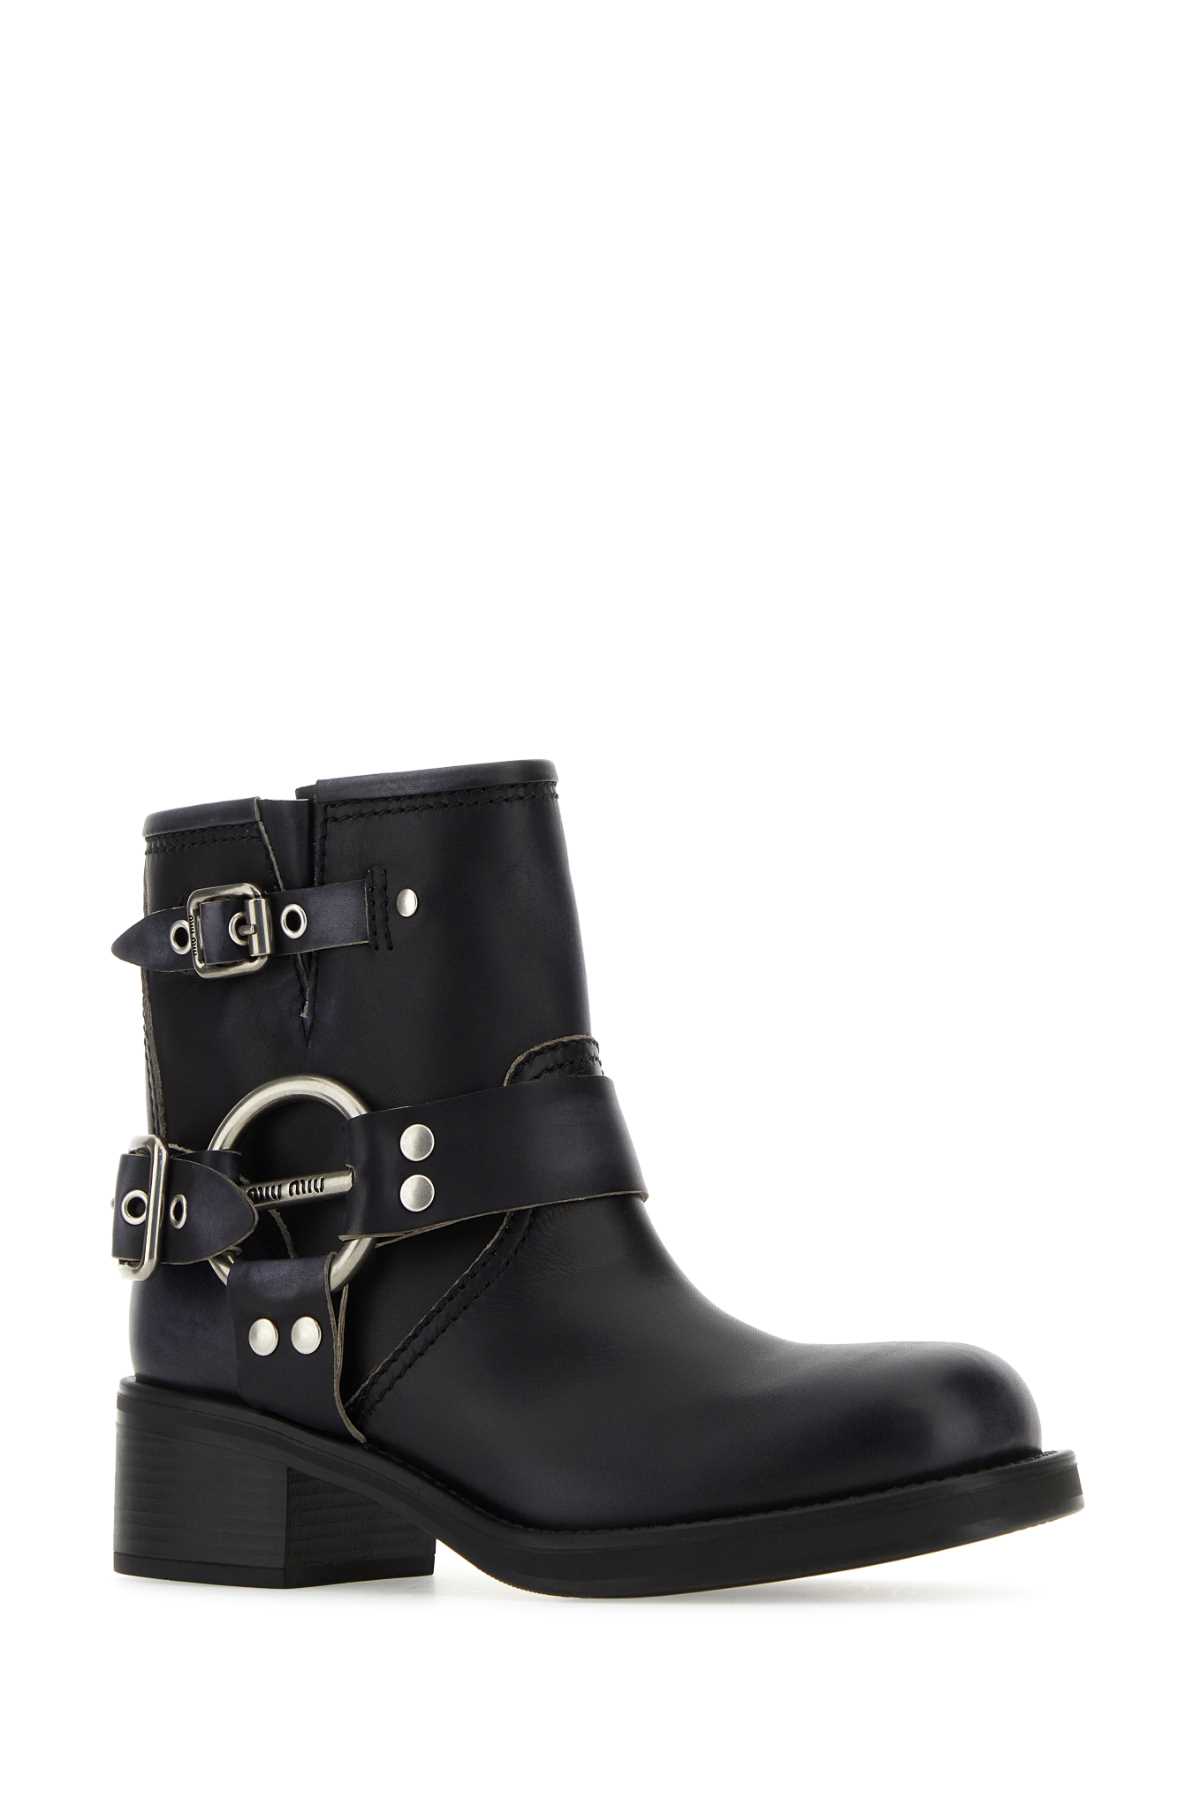 Shop Miu Miu Black Leather Ankle Boots In Nero